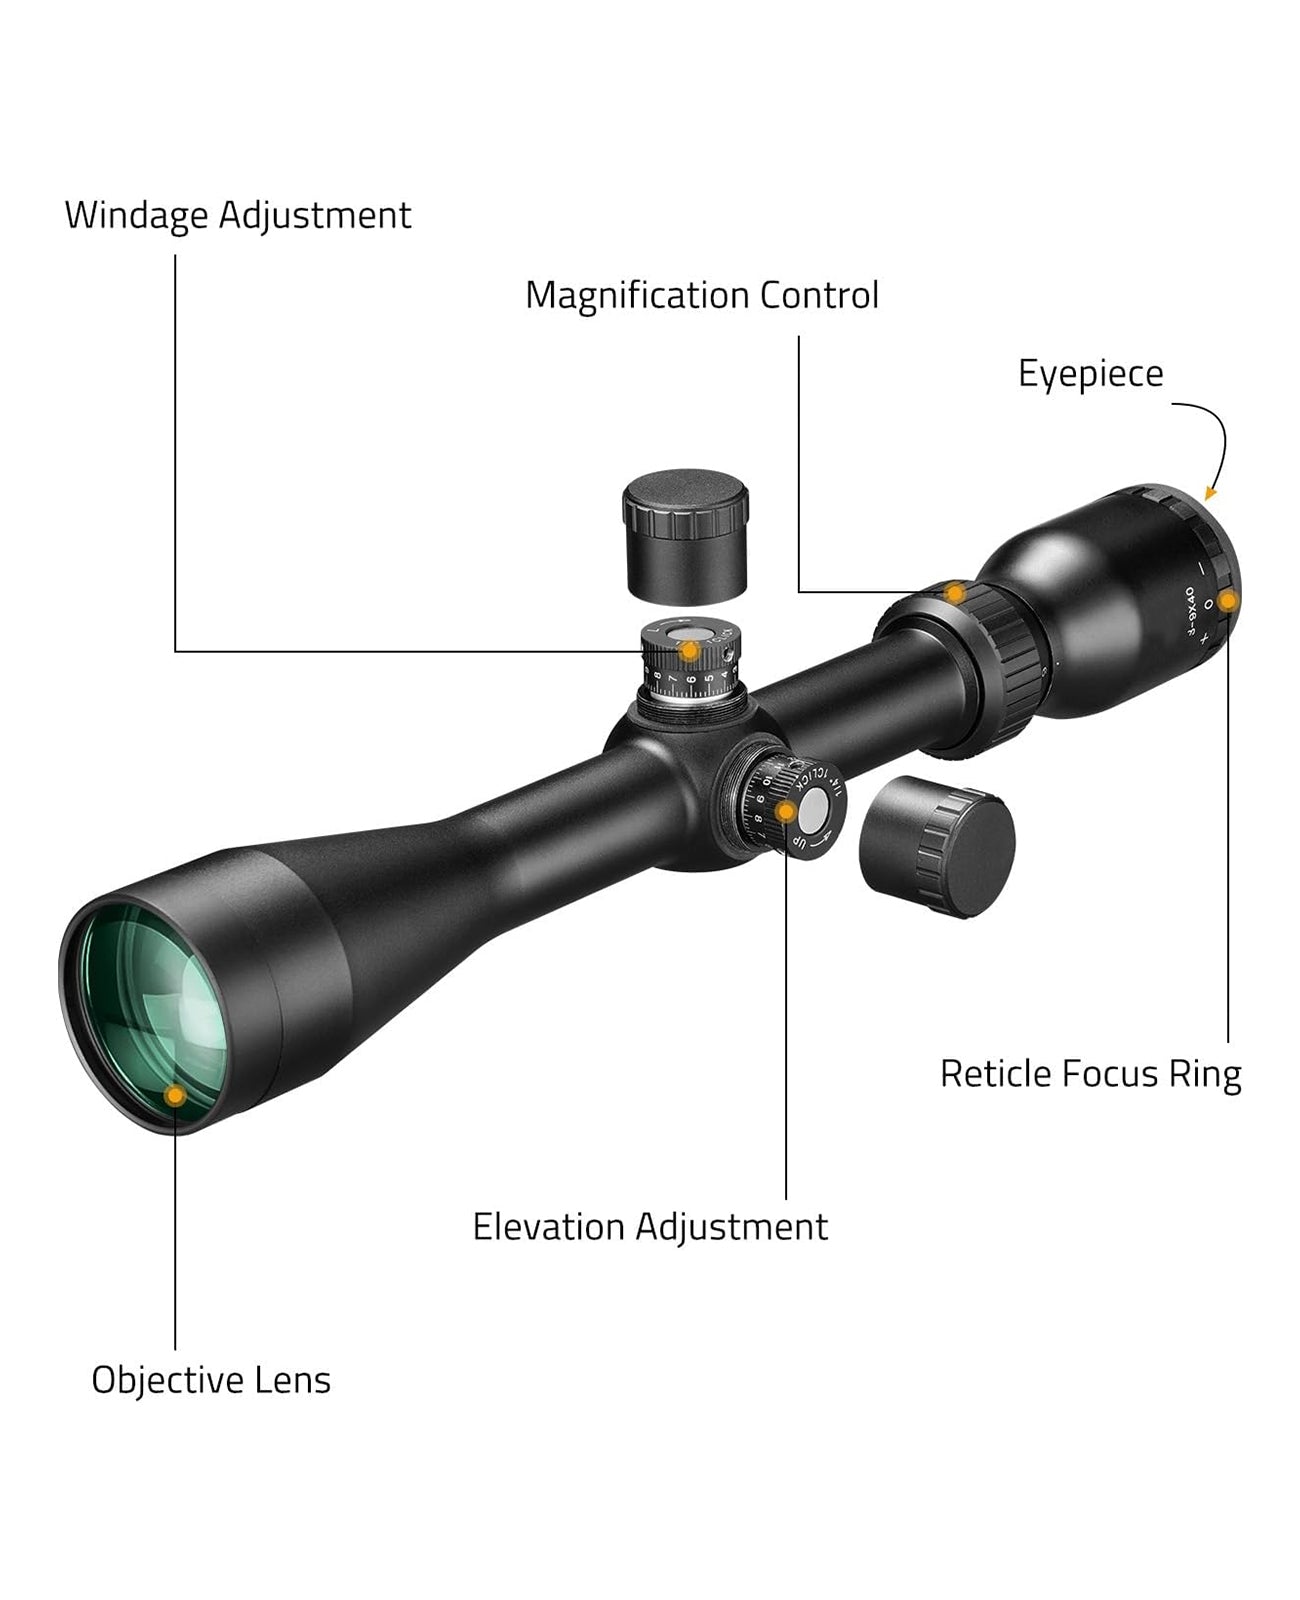 3-10x42 Red Laser Riflescope Sight Telescopic Optics Reflex Rifle Scope  Airsoft